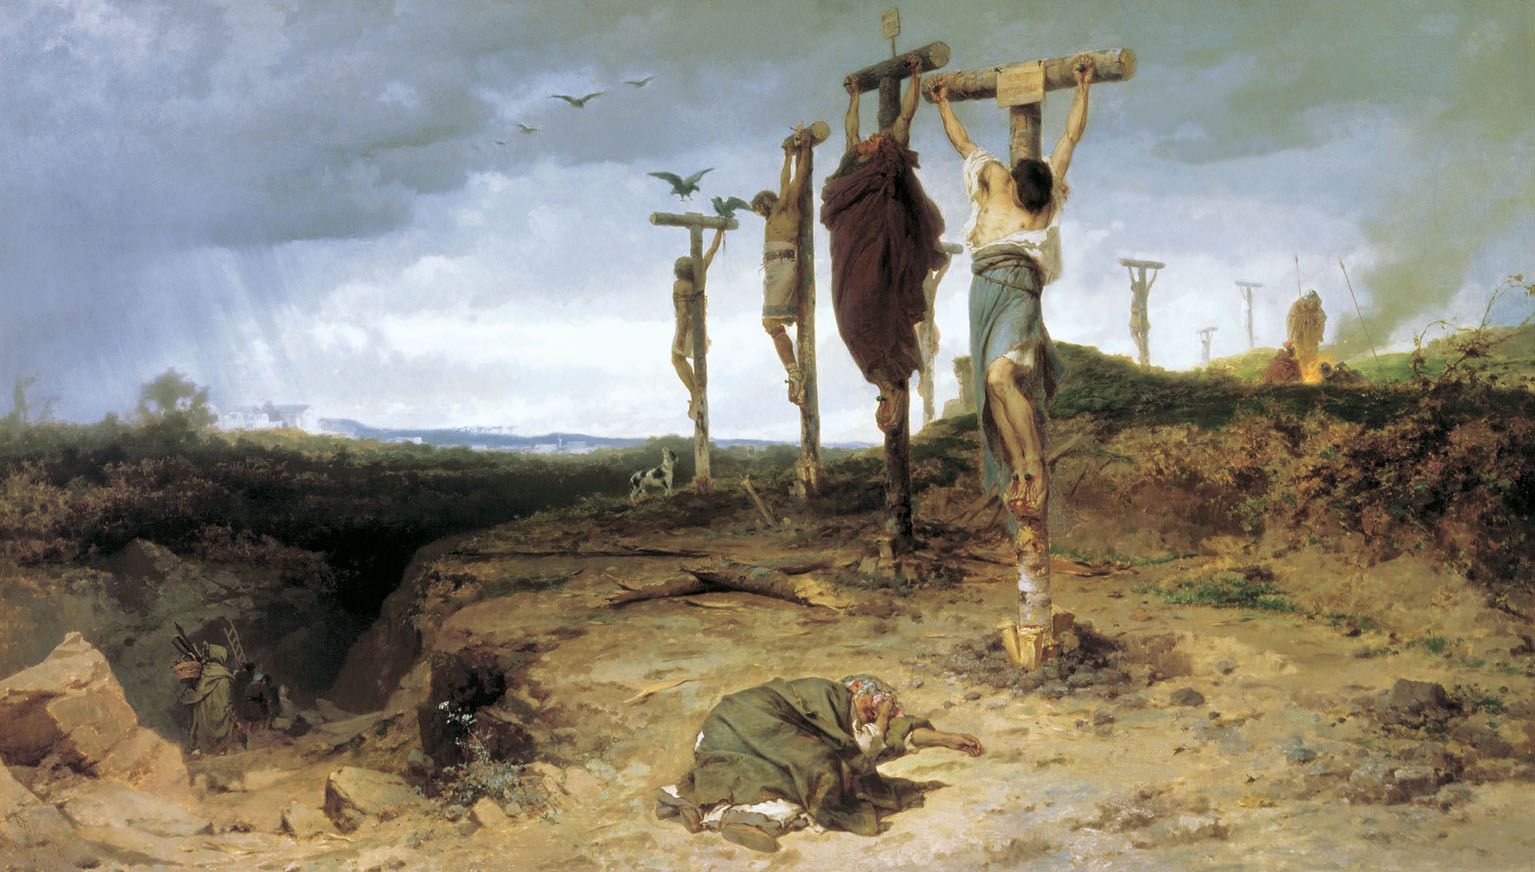 Crucified slaves Image public domain